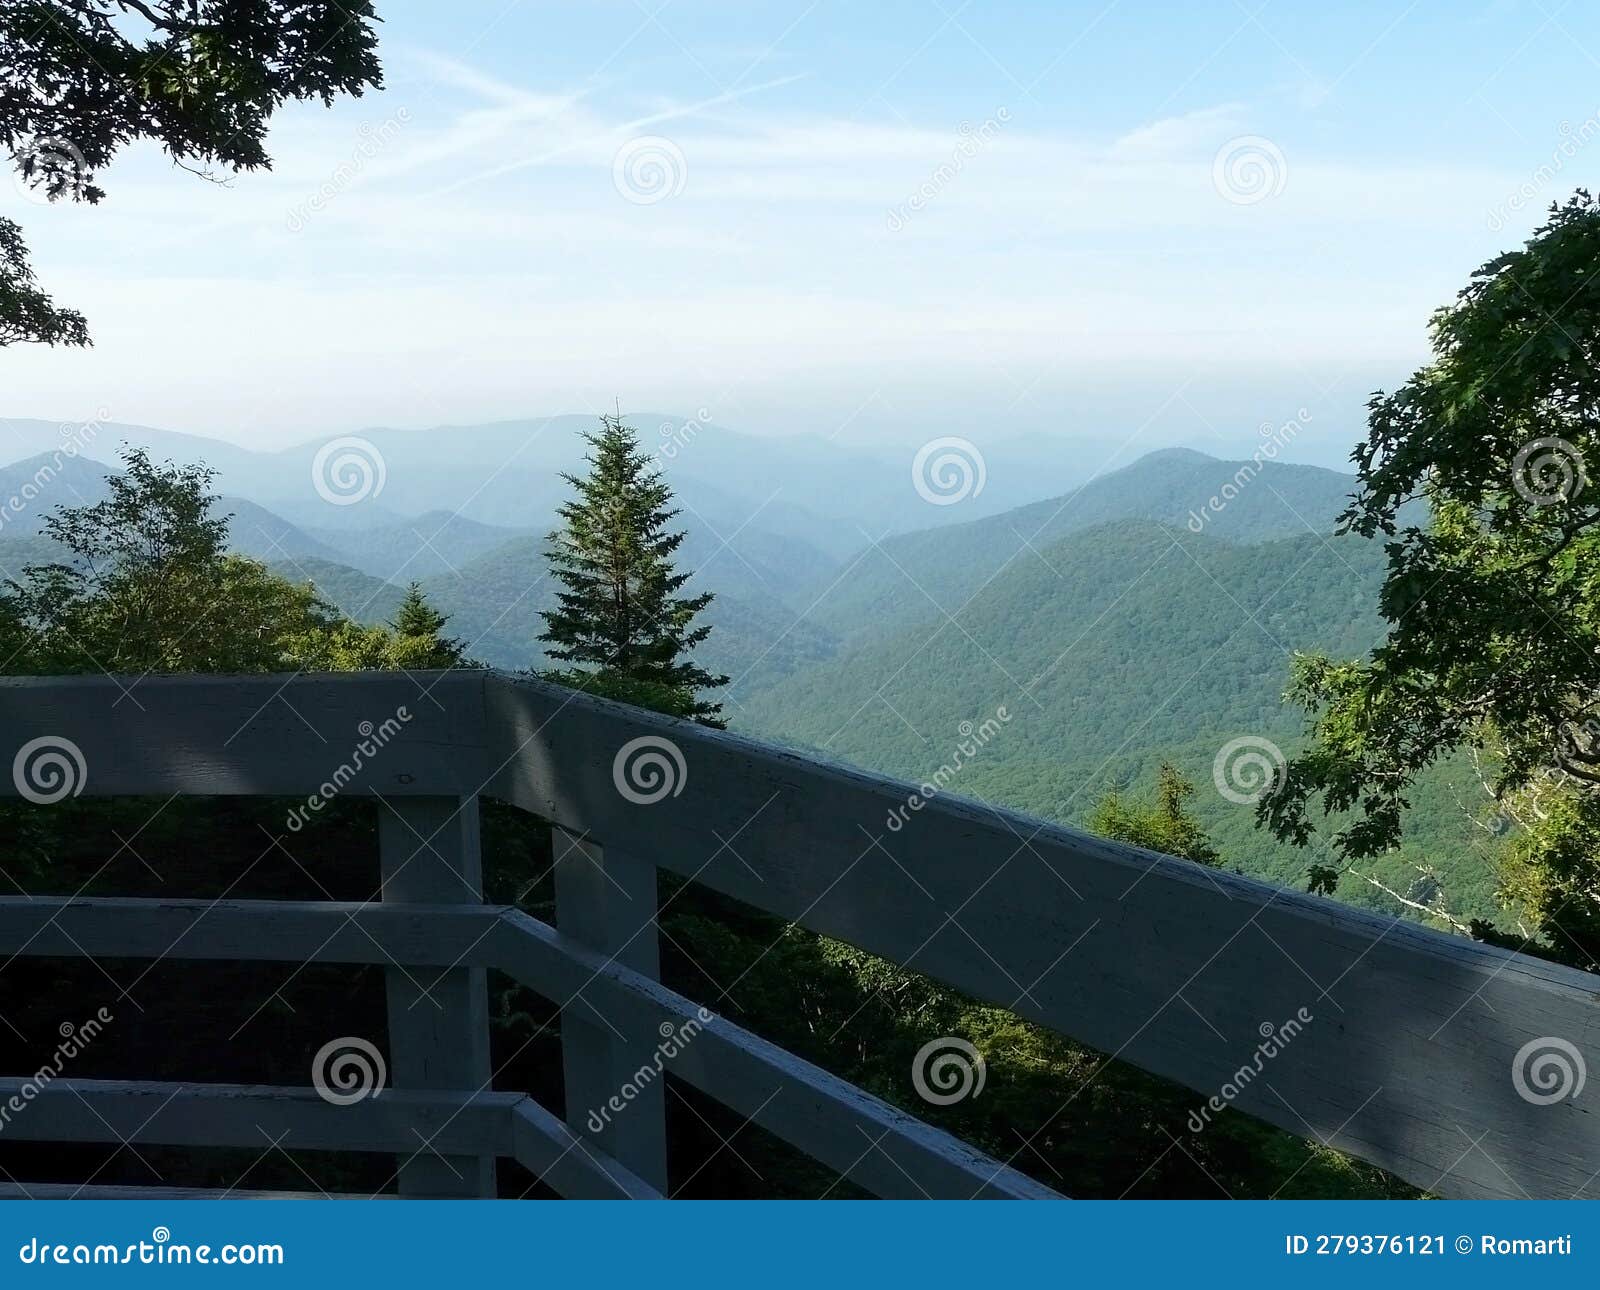 roy taylor overlook blue ridge parkway